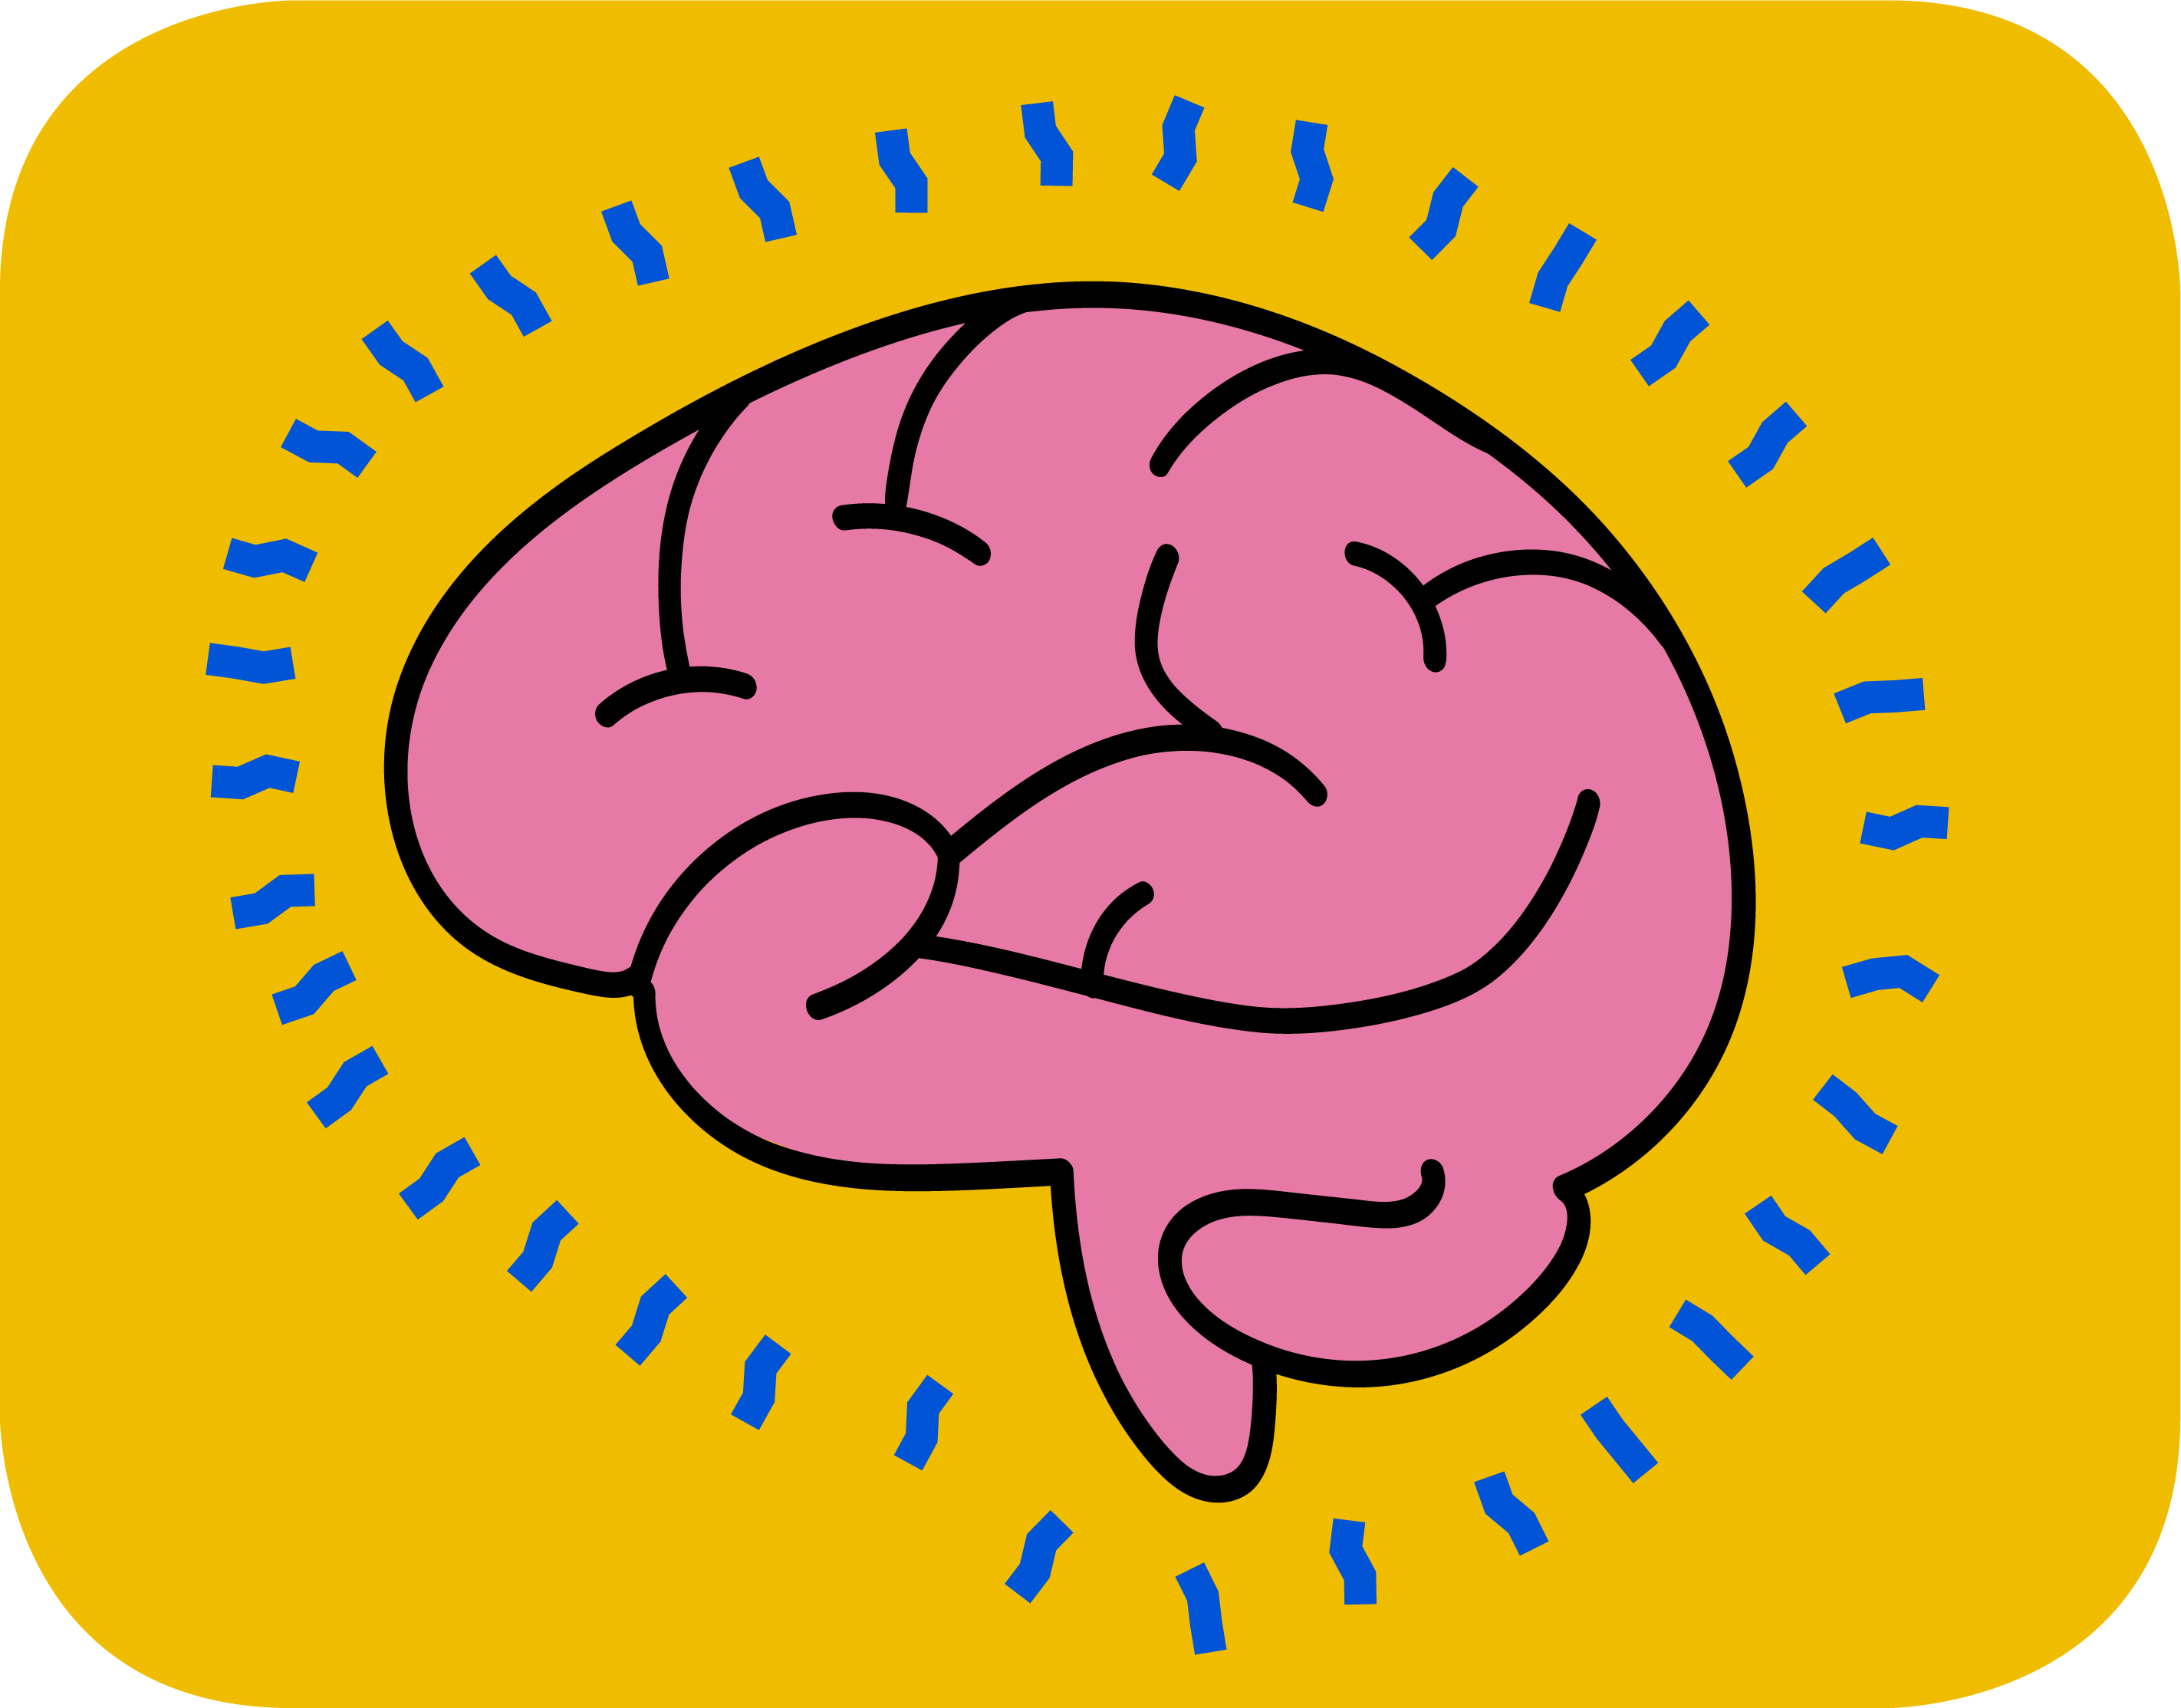 Wikipedia 20 symbol - Brain